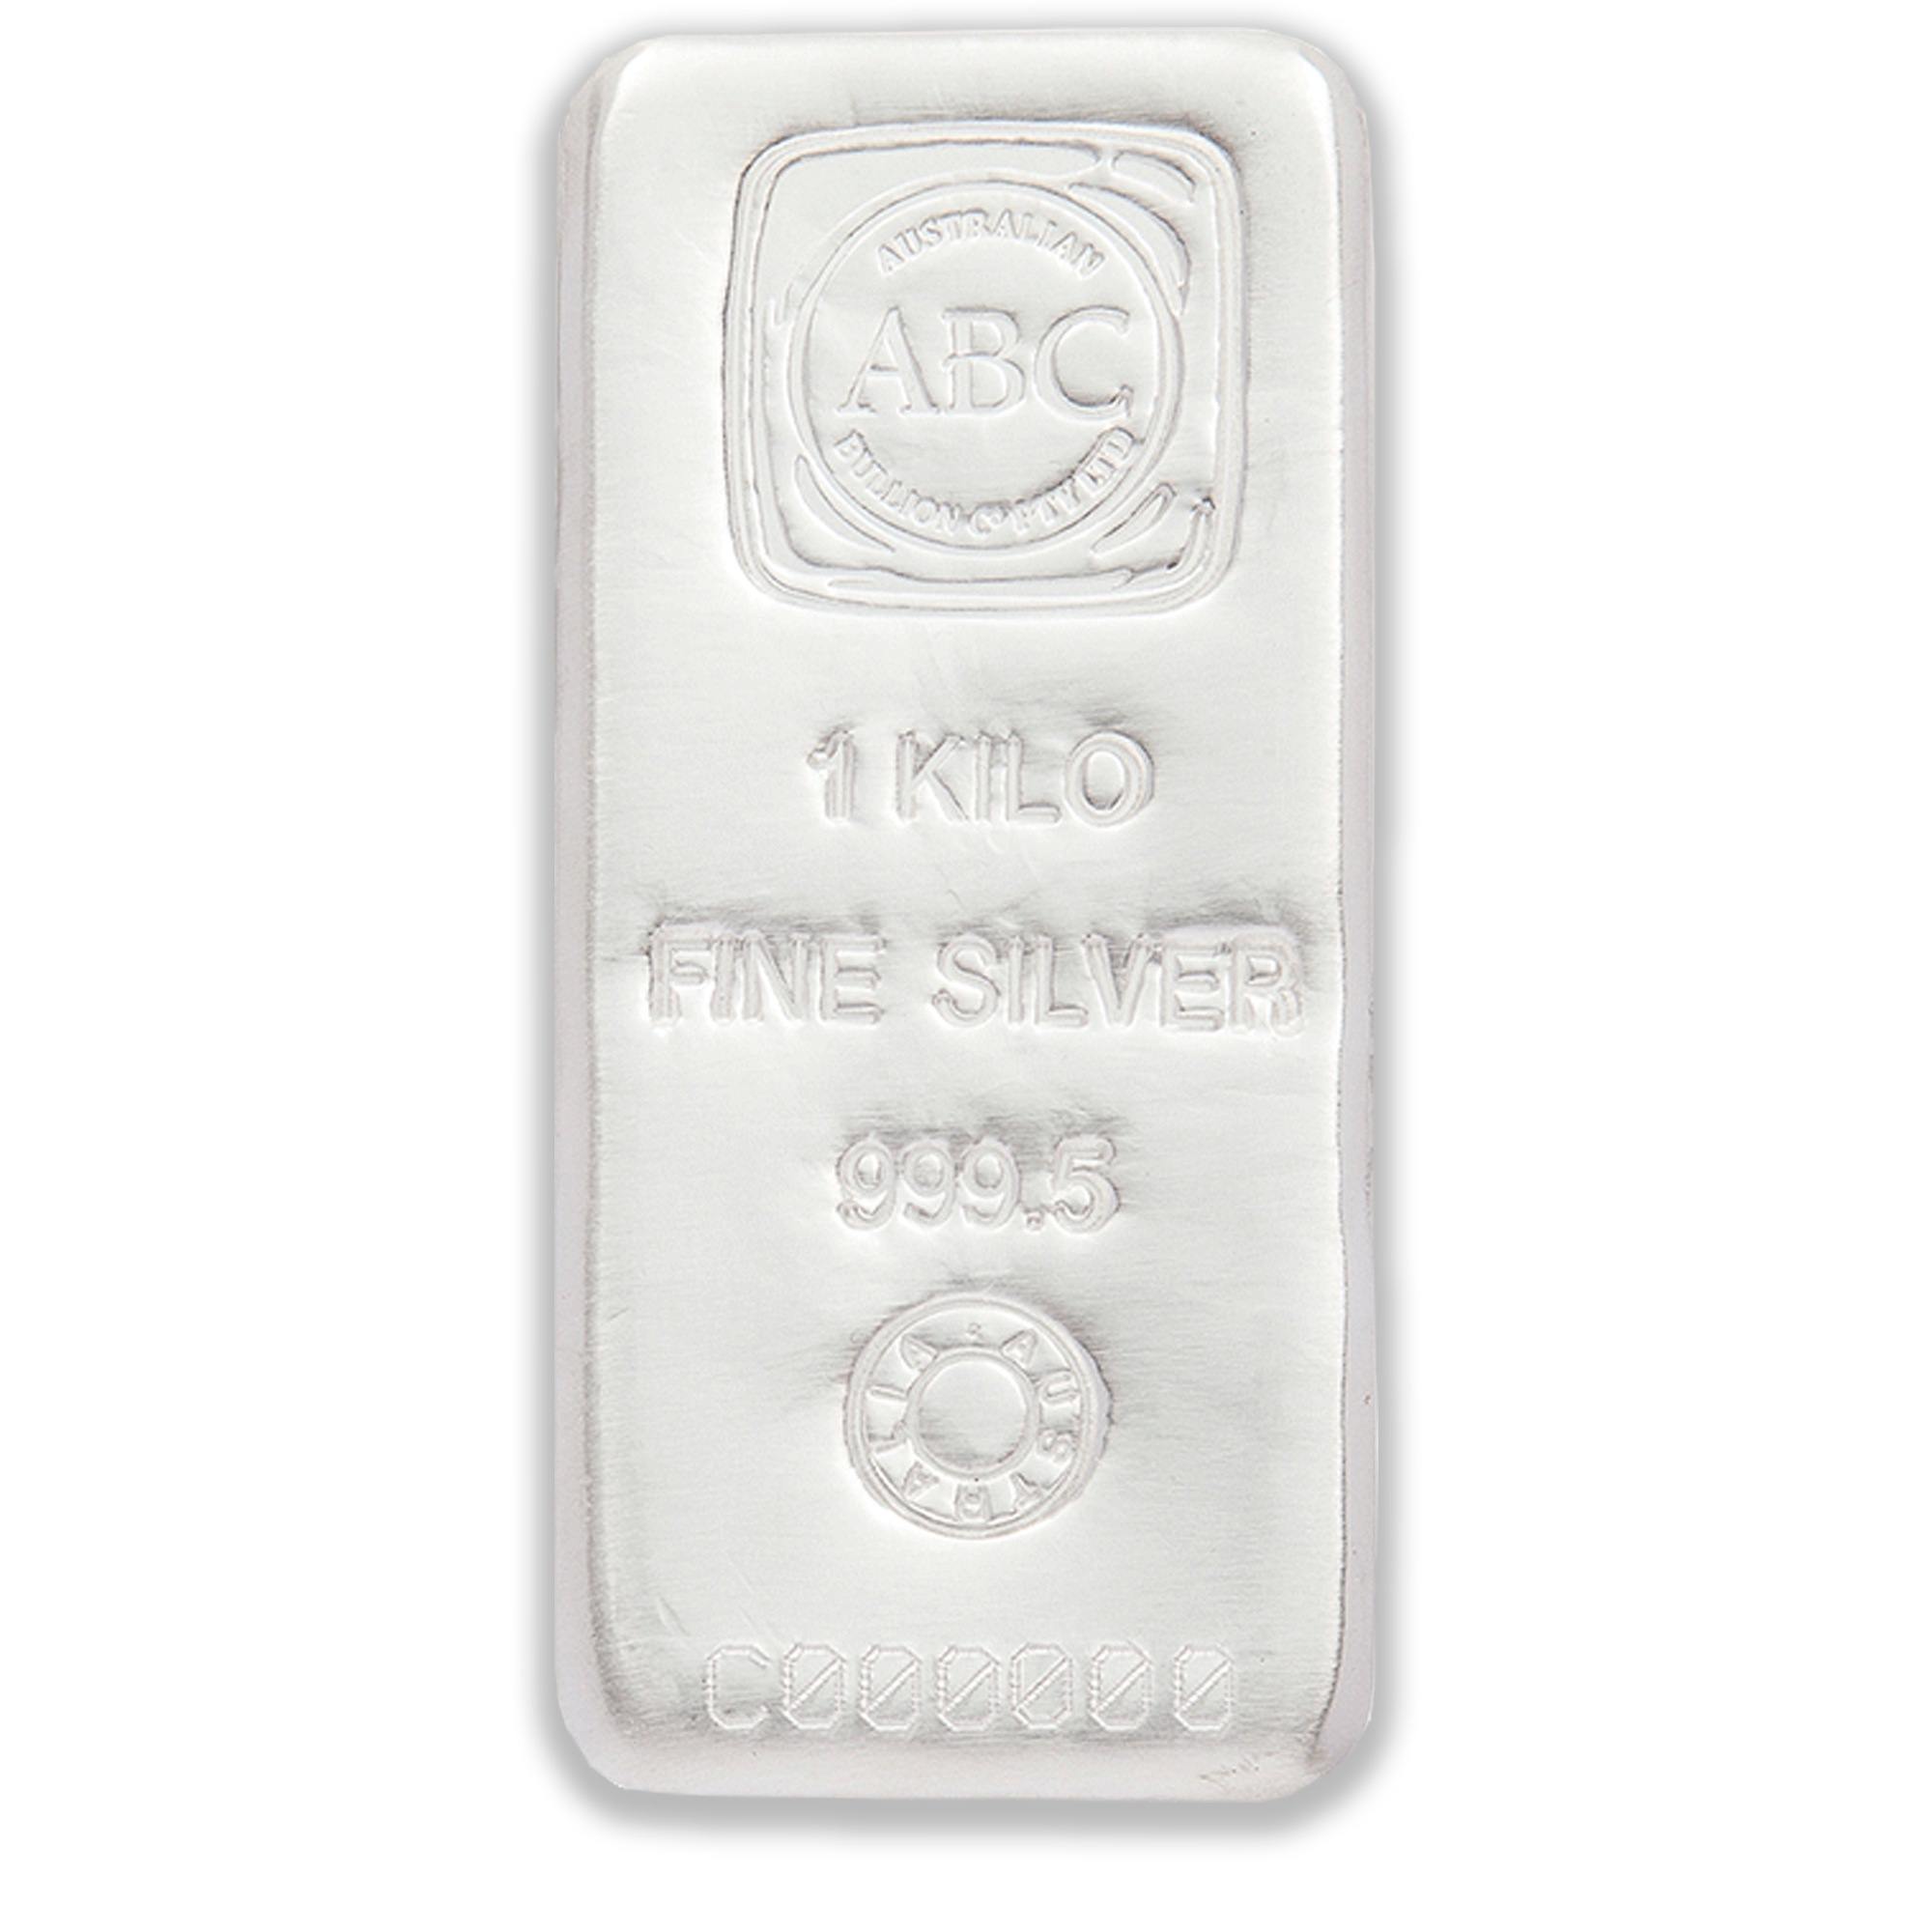 1kg ABC Silver Cast Bar